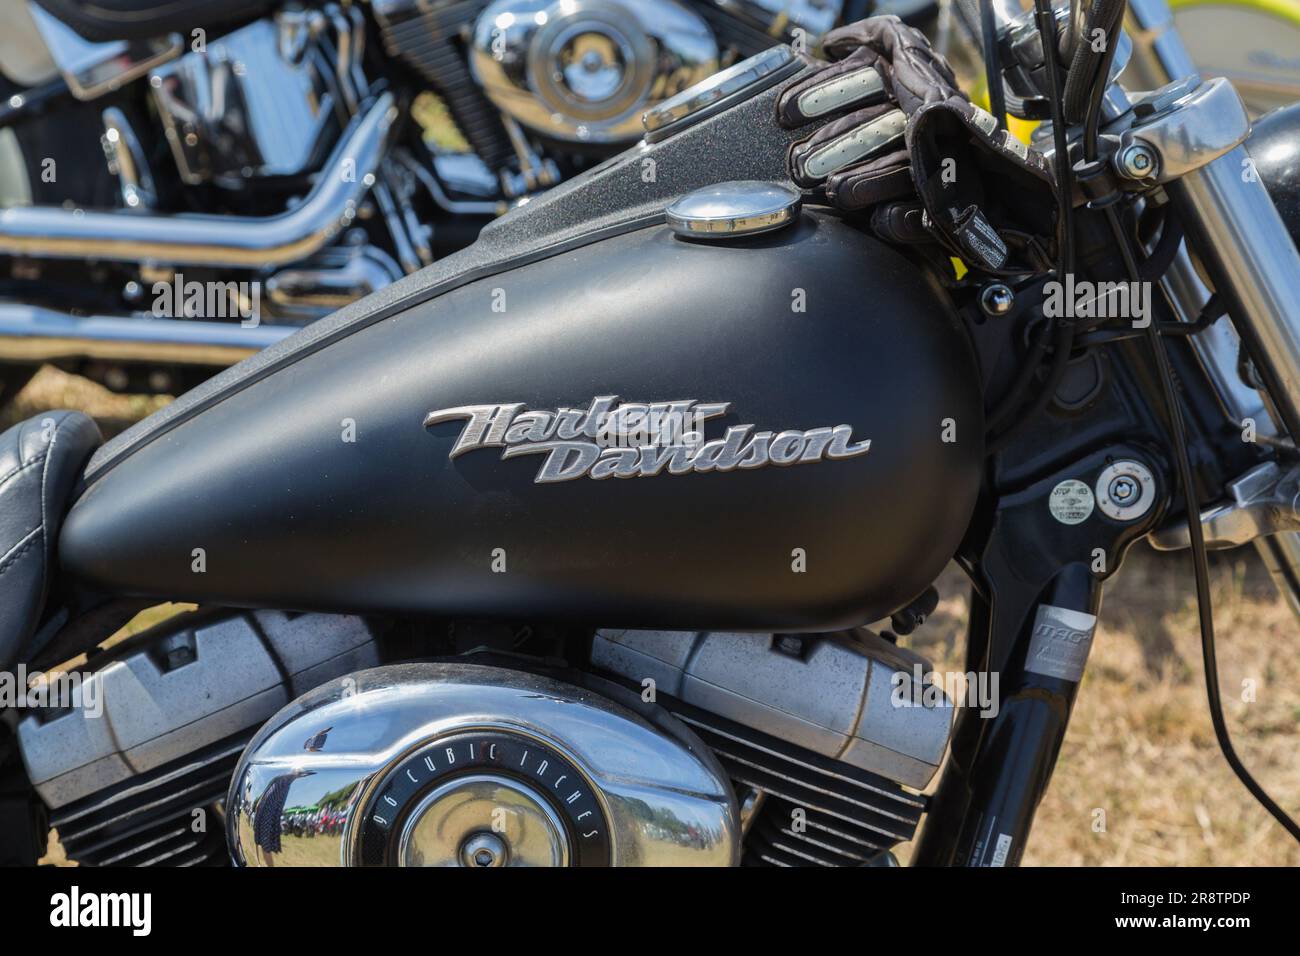 Nahaufnahme des Benzintanks-Emblems eines Harley Davidson Motorrads. Harley Davidson Motorradabzeichen. Roadtrip, Freiheit oder Lifestyle-Konzept. Stockfoto